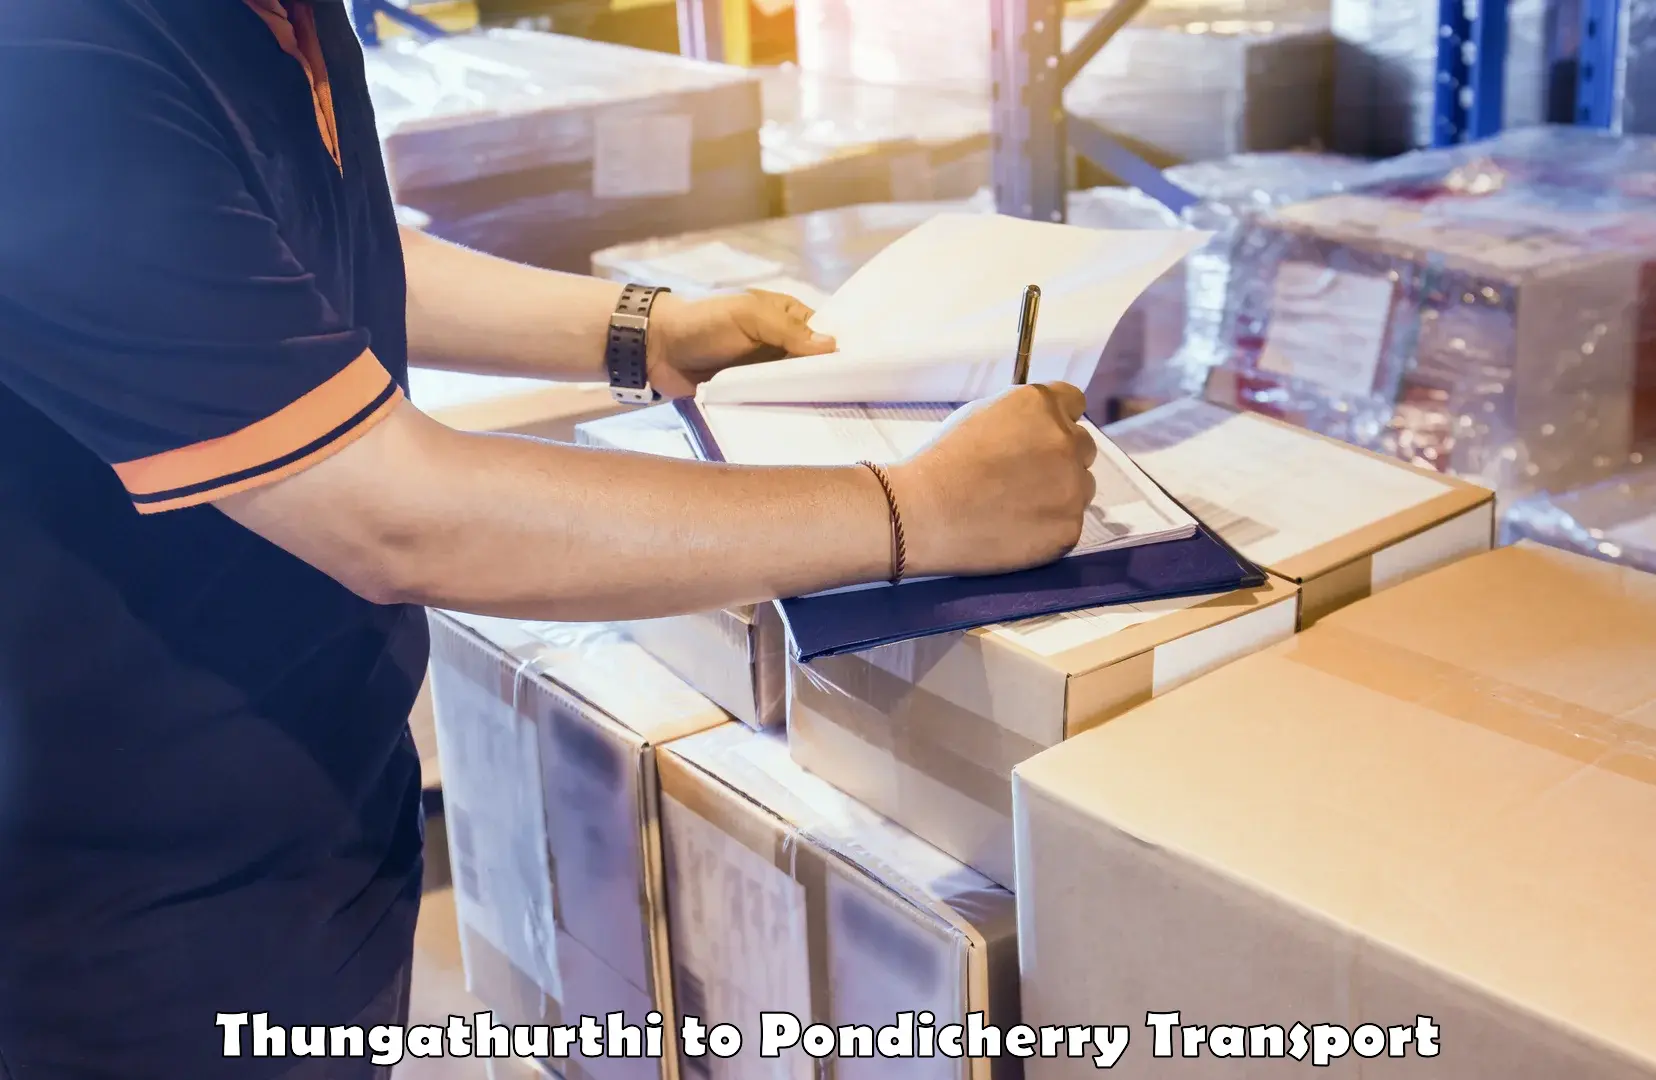 Daily transport service Thungathurthi to Pondicherry